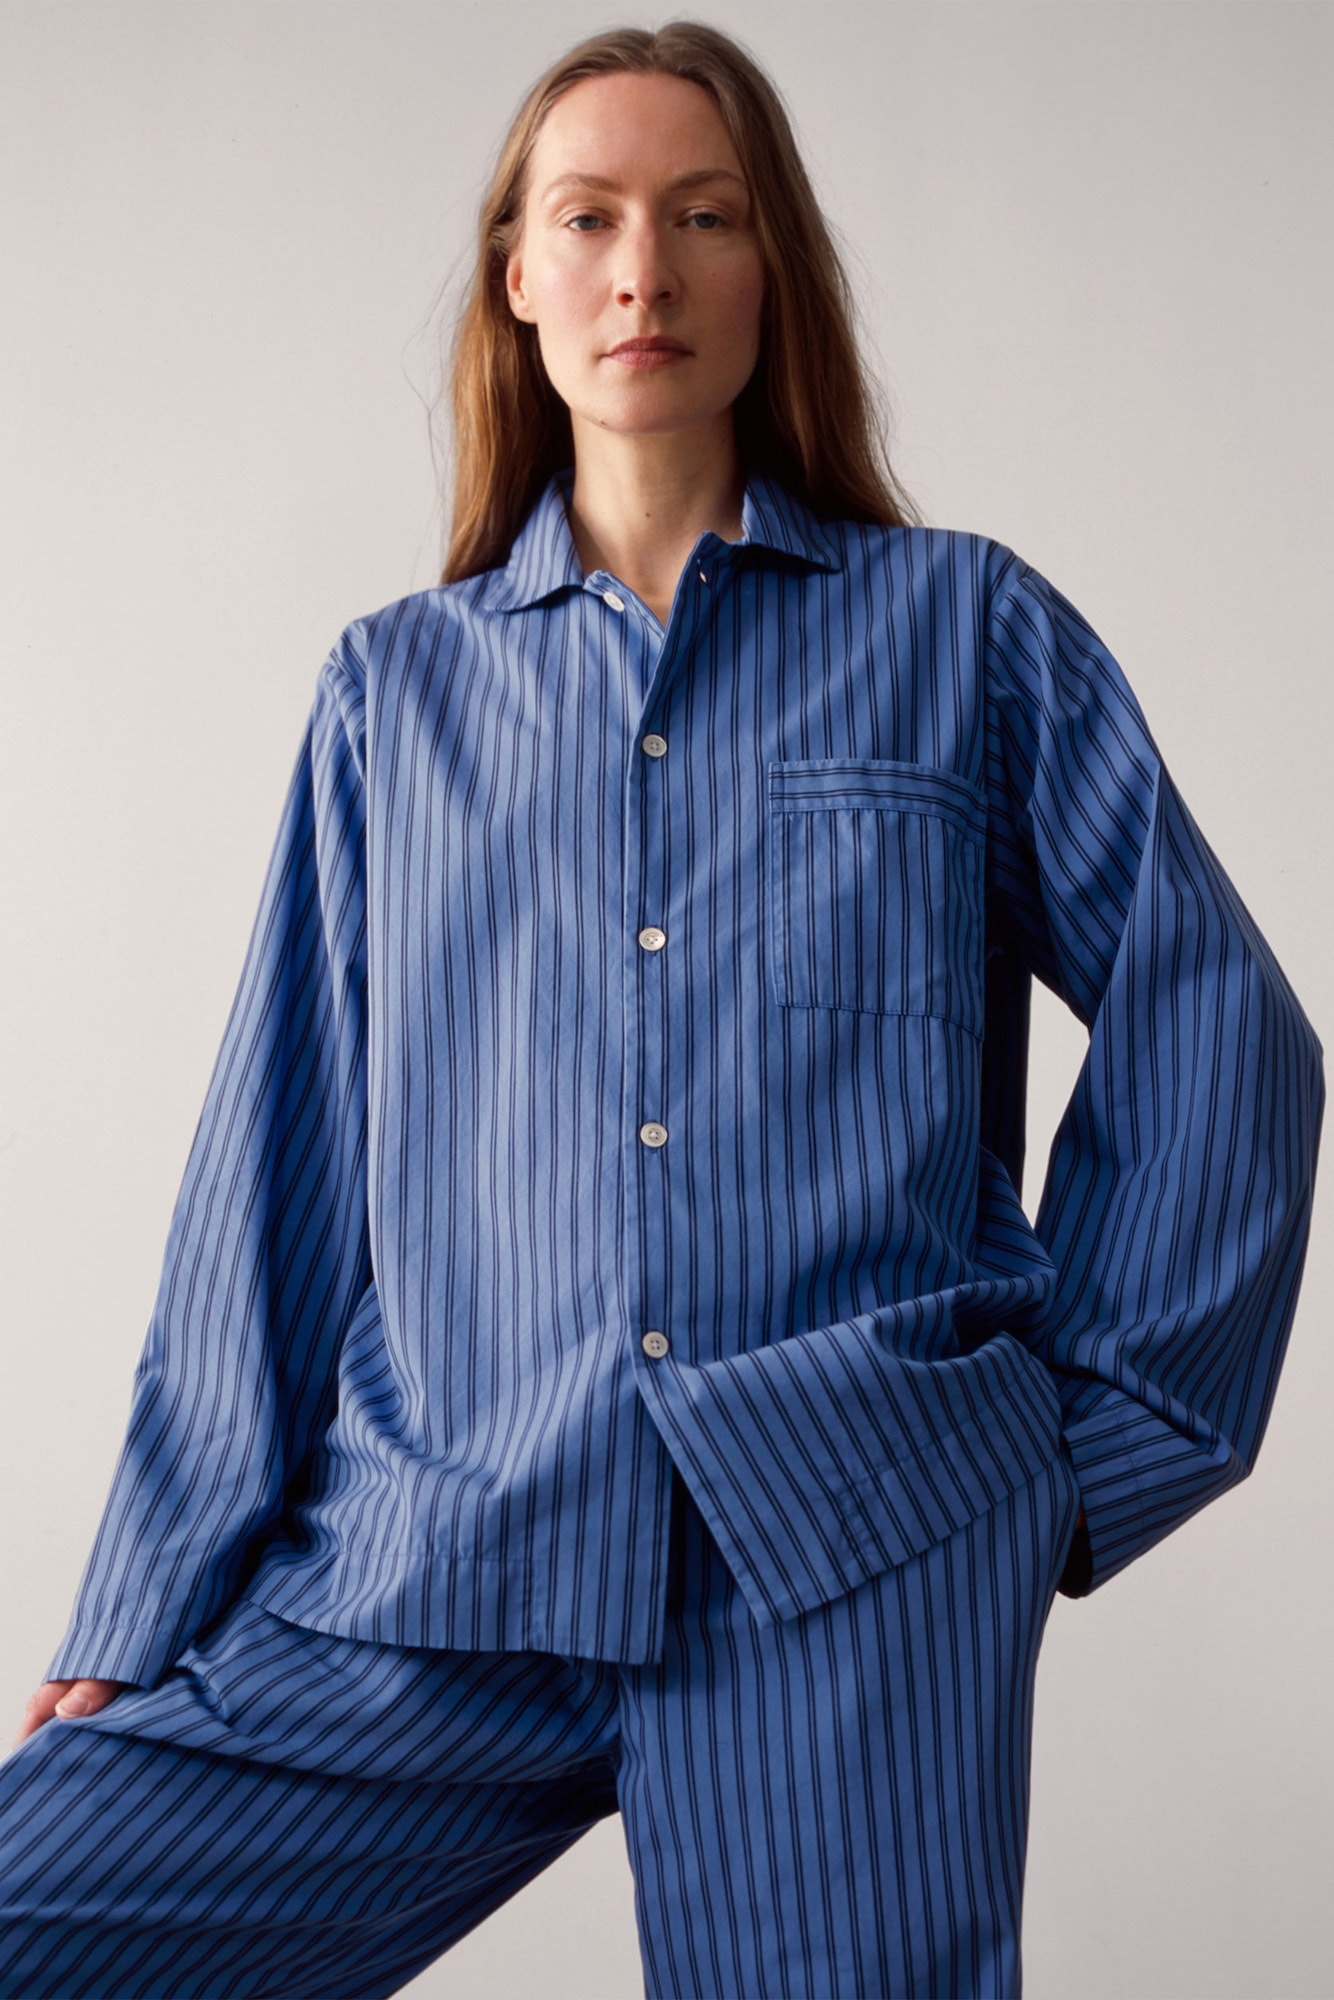 Tekla Spring/Summer Pyjamas Sleepwear Lookbook Shirts Shorts